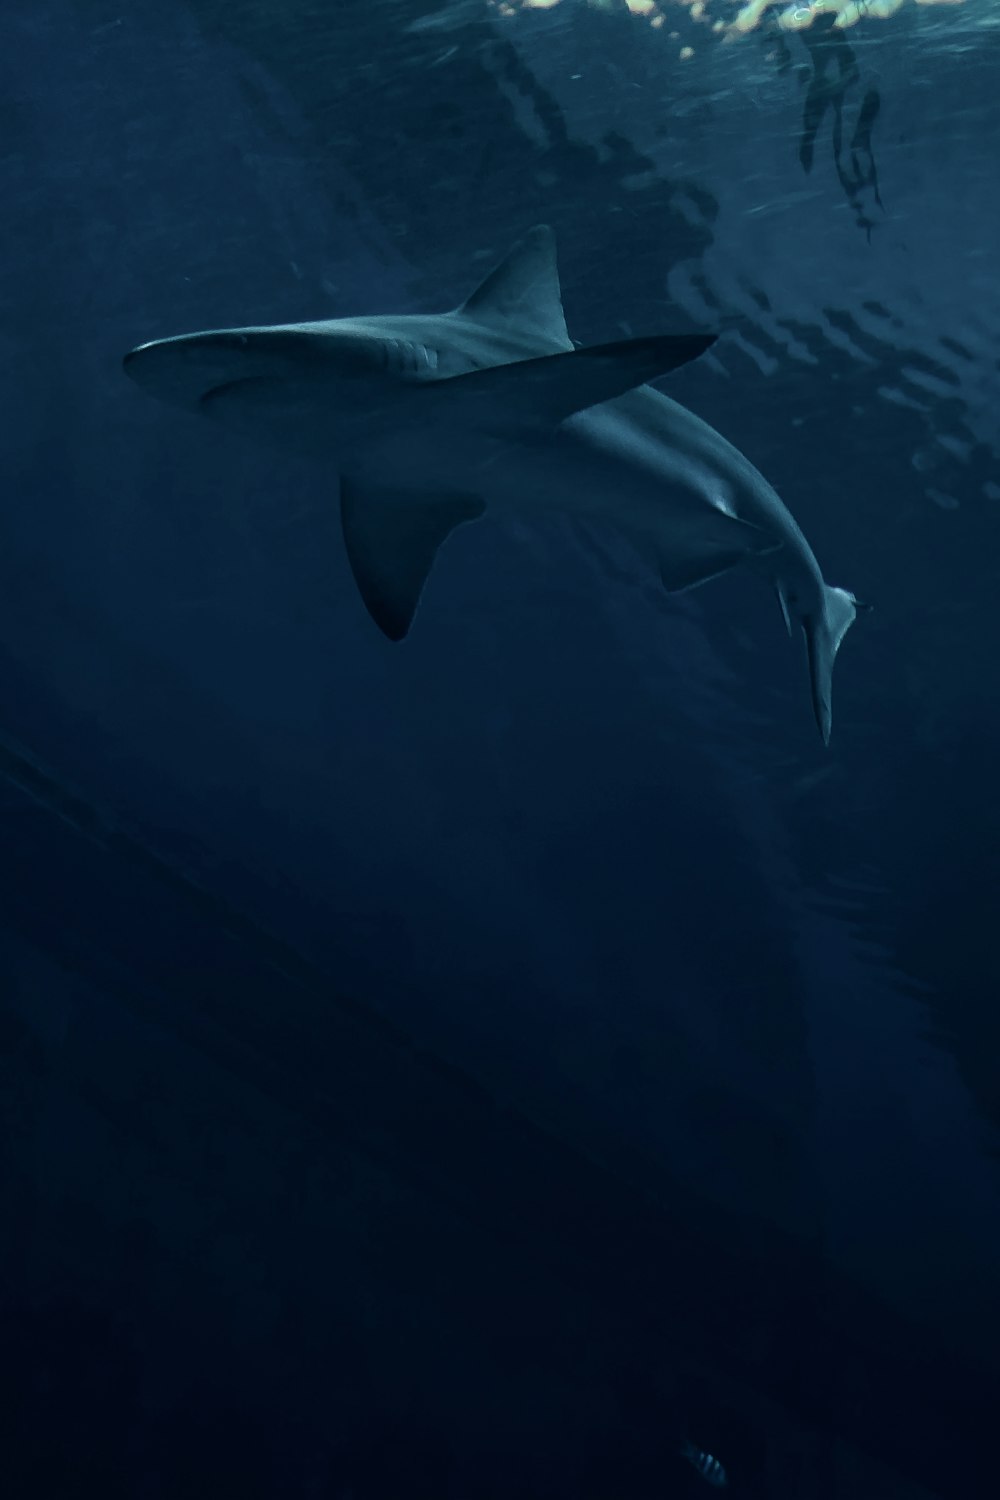 Fondos de pantalla de tiburones: Descarga HD gratuita [500+ HQ] | Unsplash